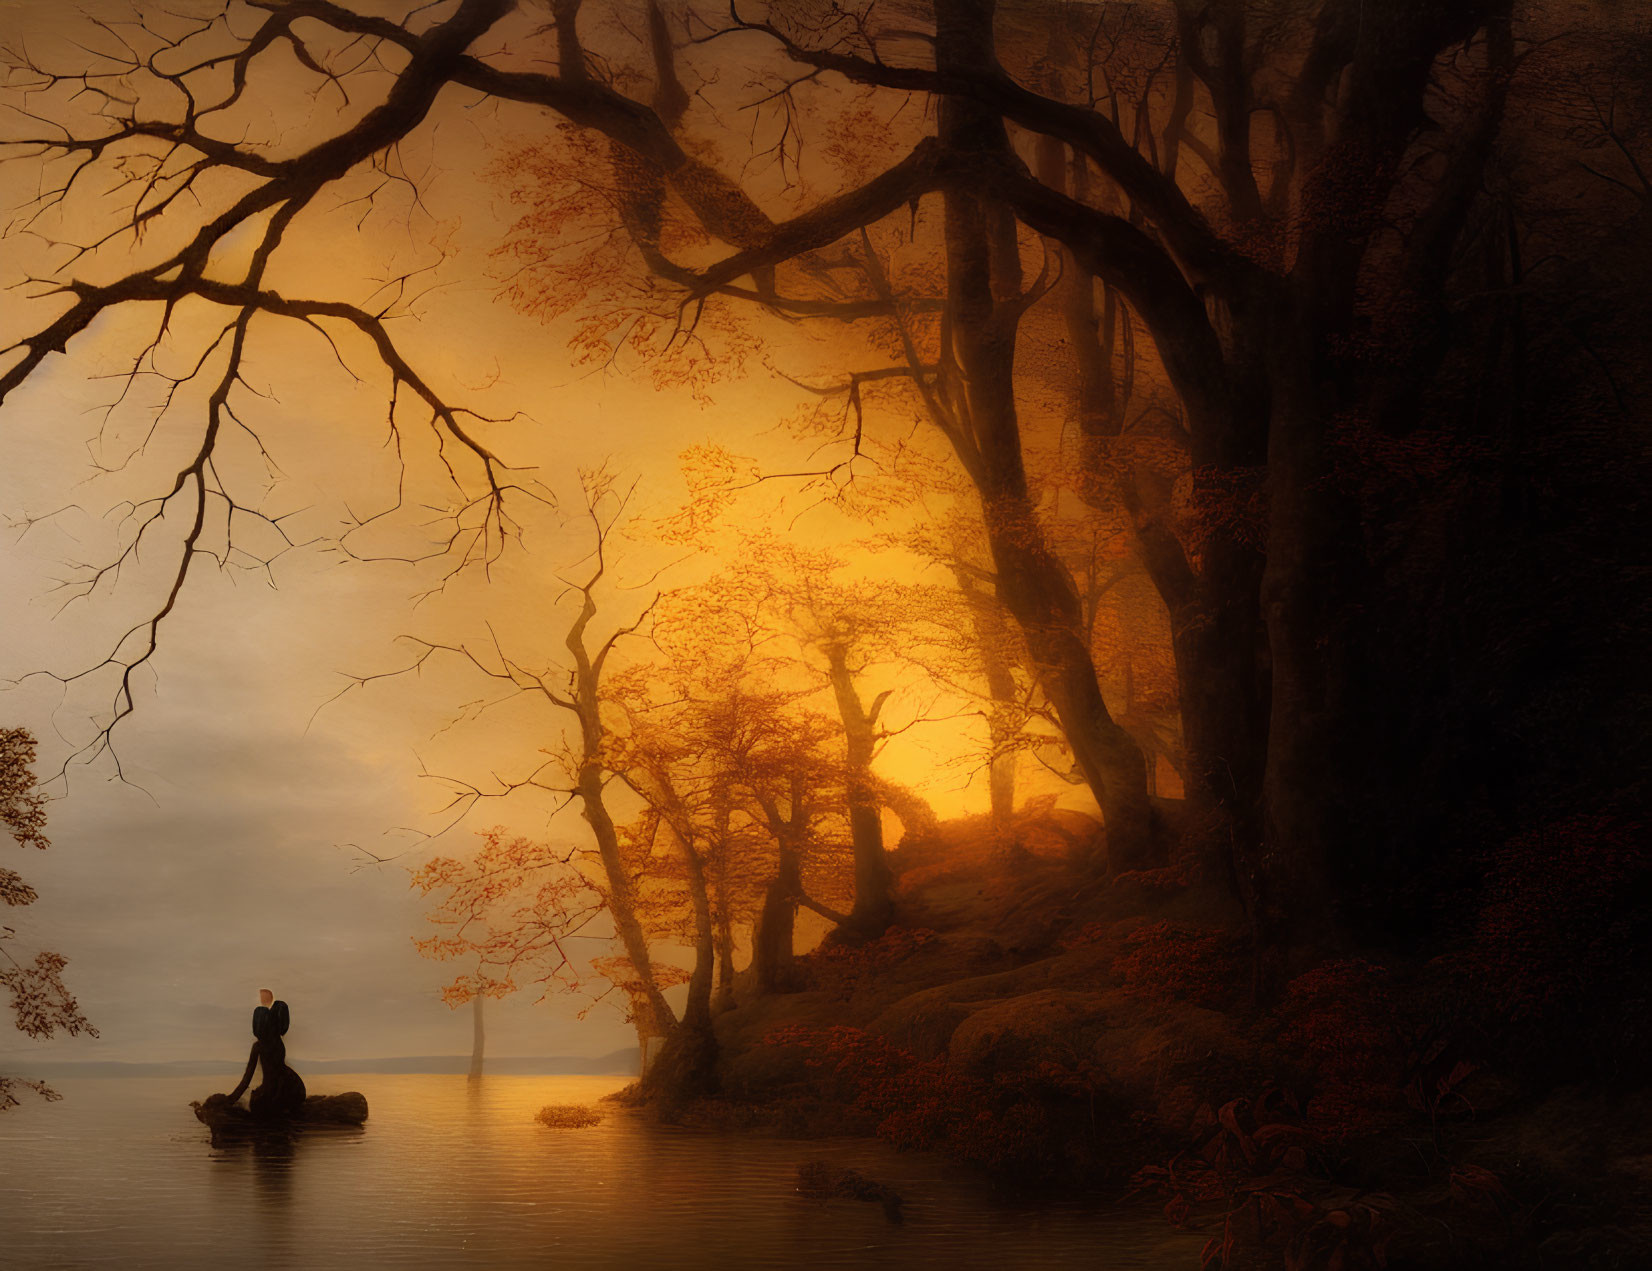 Serene sunset lake scene with person on raft under autumn trees